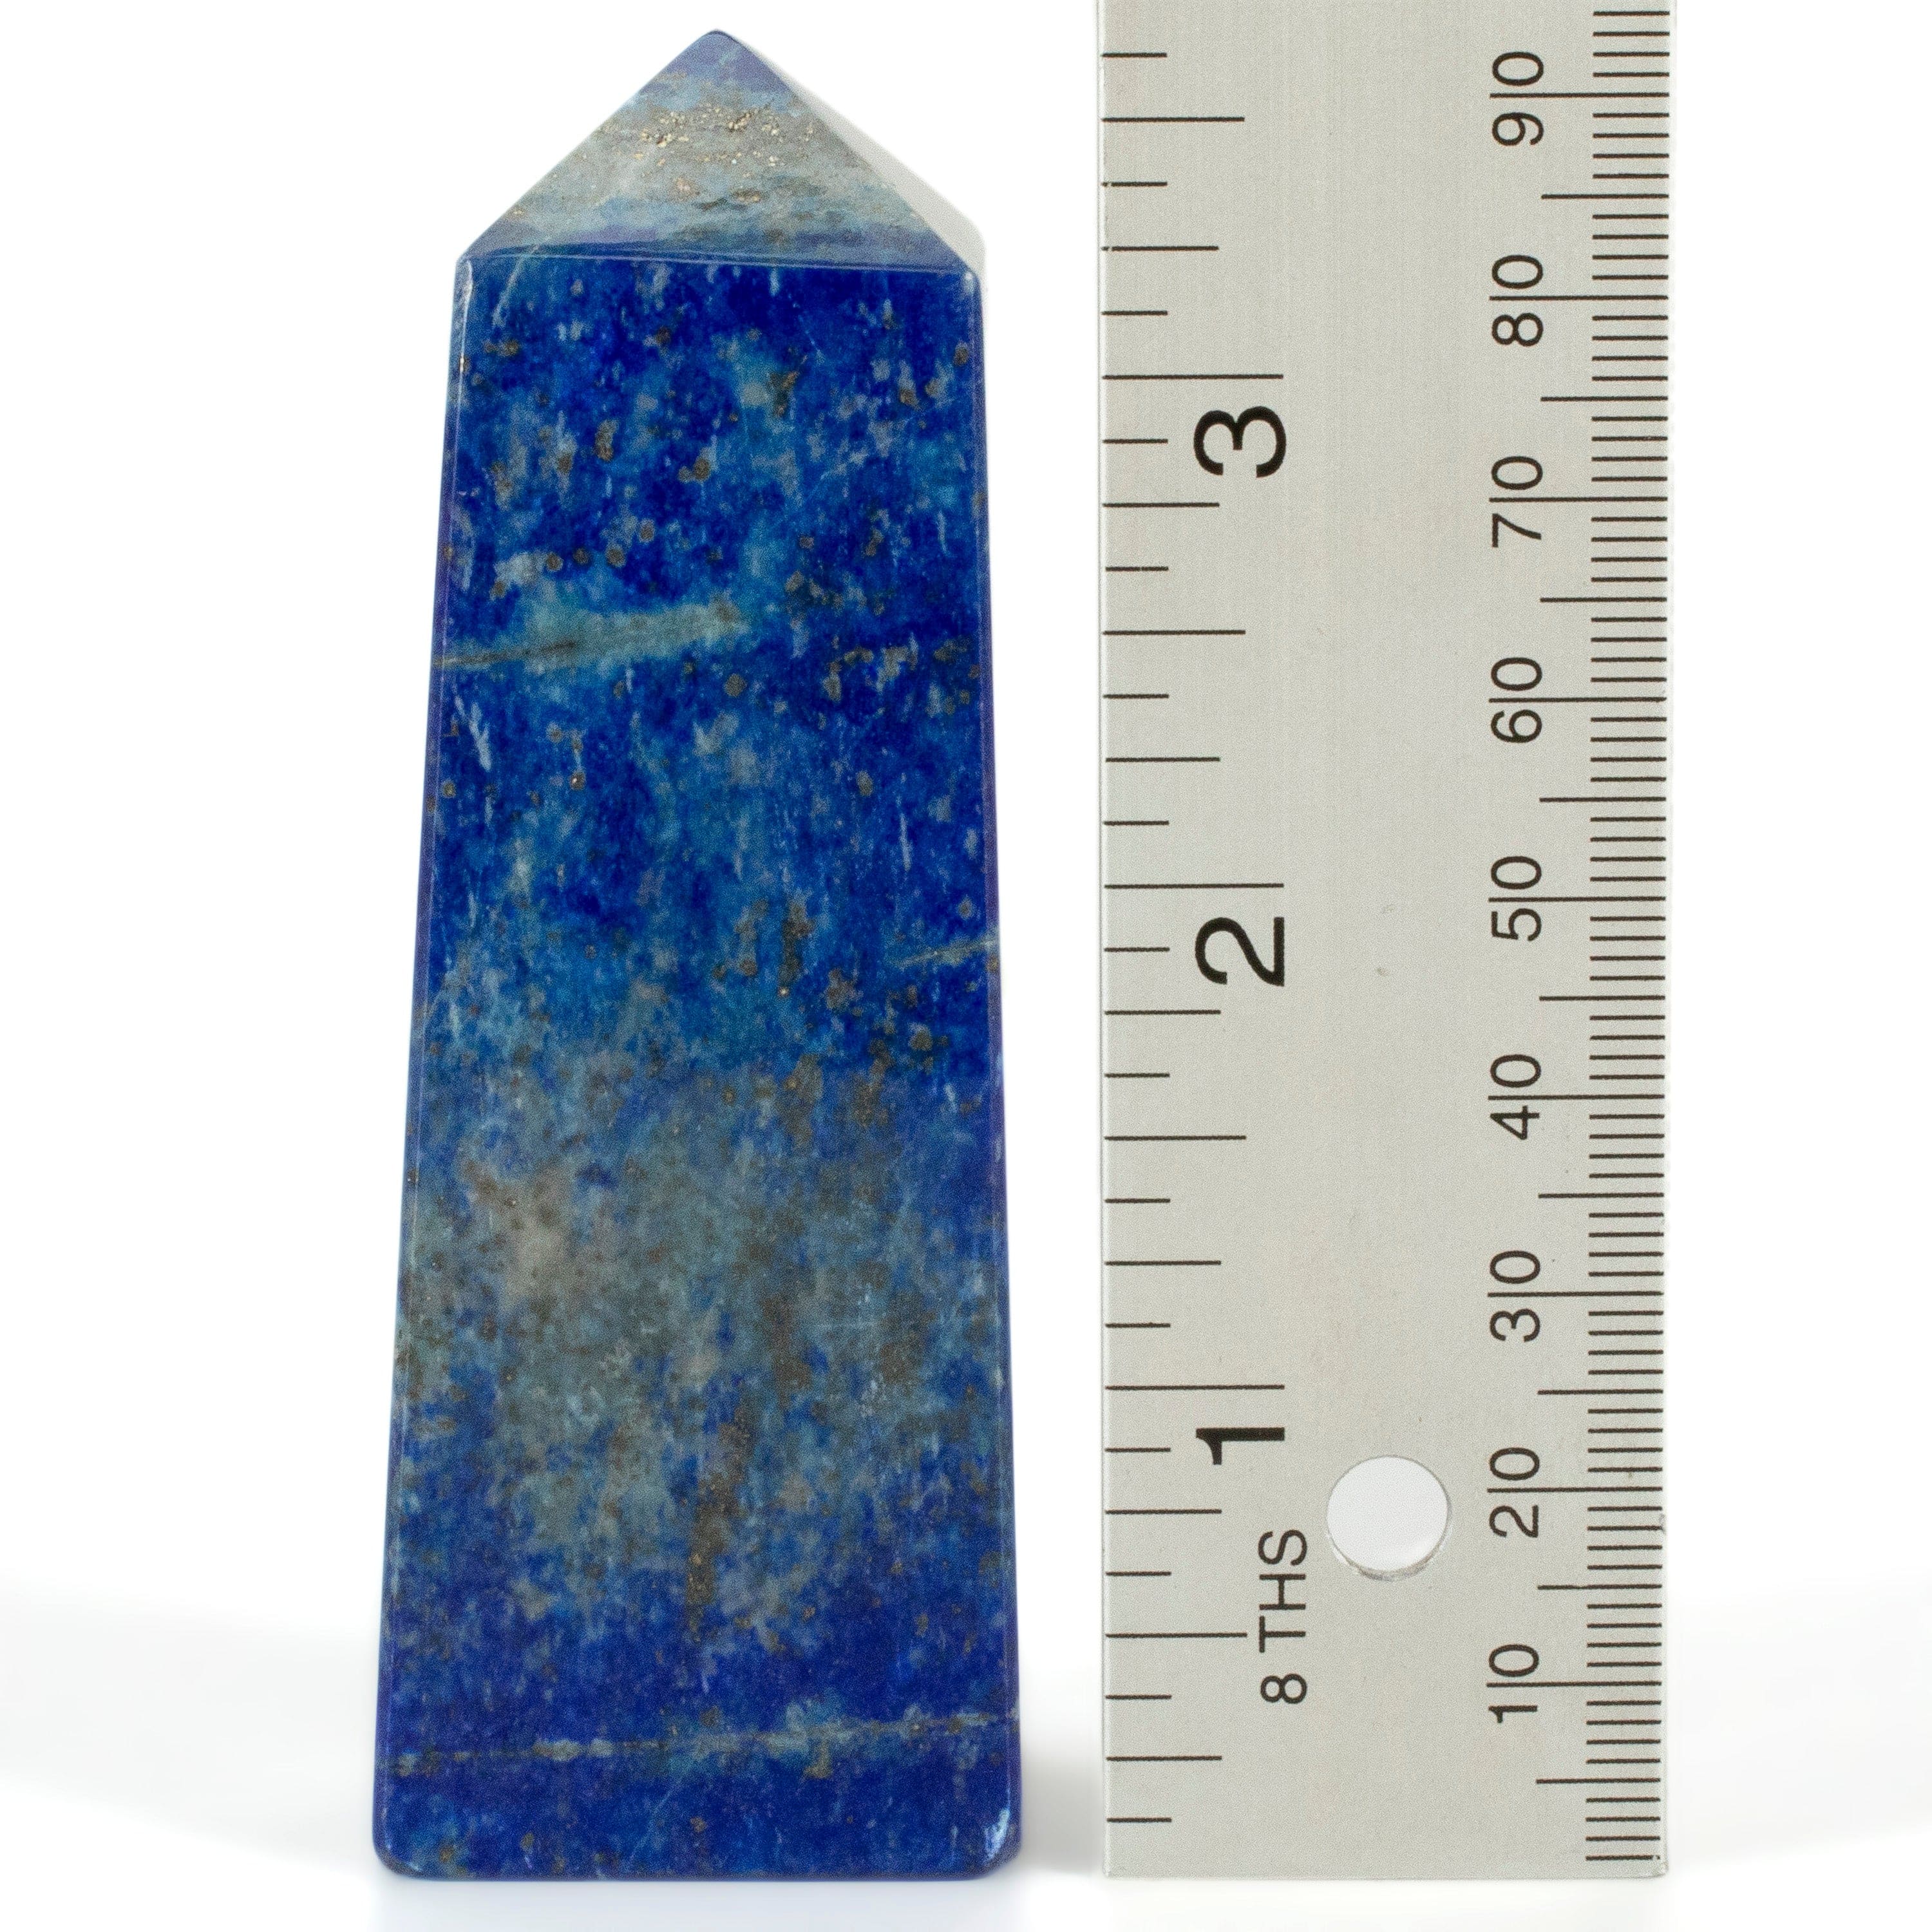 Kalifano Lapis Lapis Lazuli Polished Obelisk from Afghanistan - 4" / 229 grams LPOB500.002